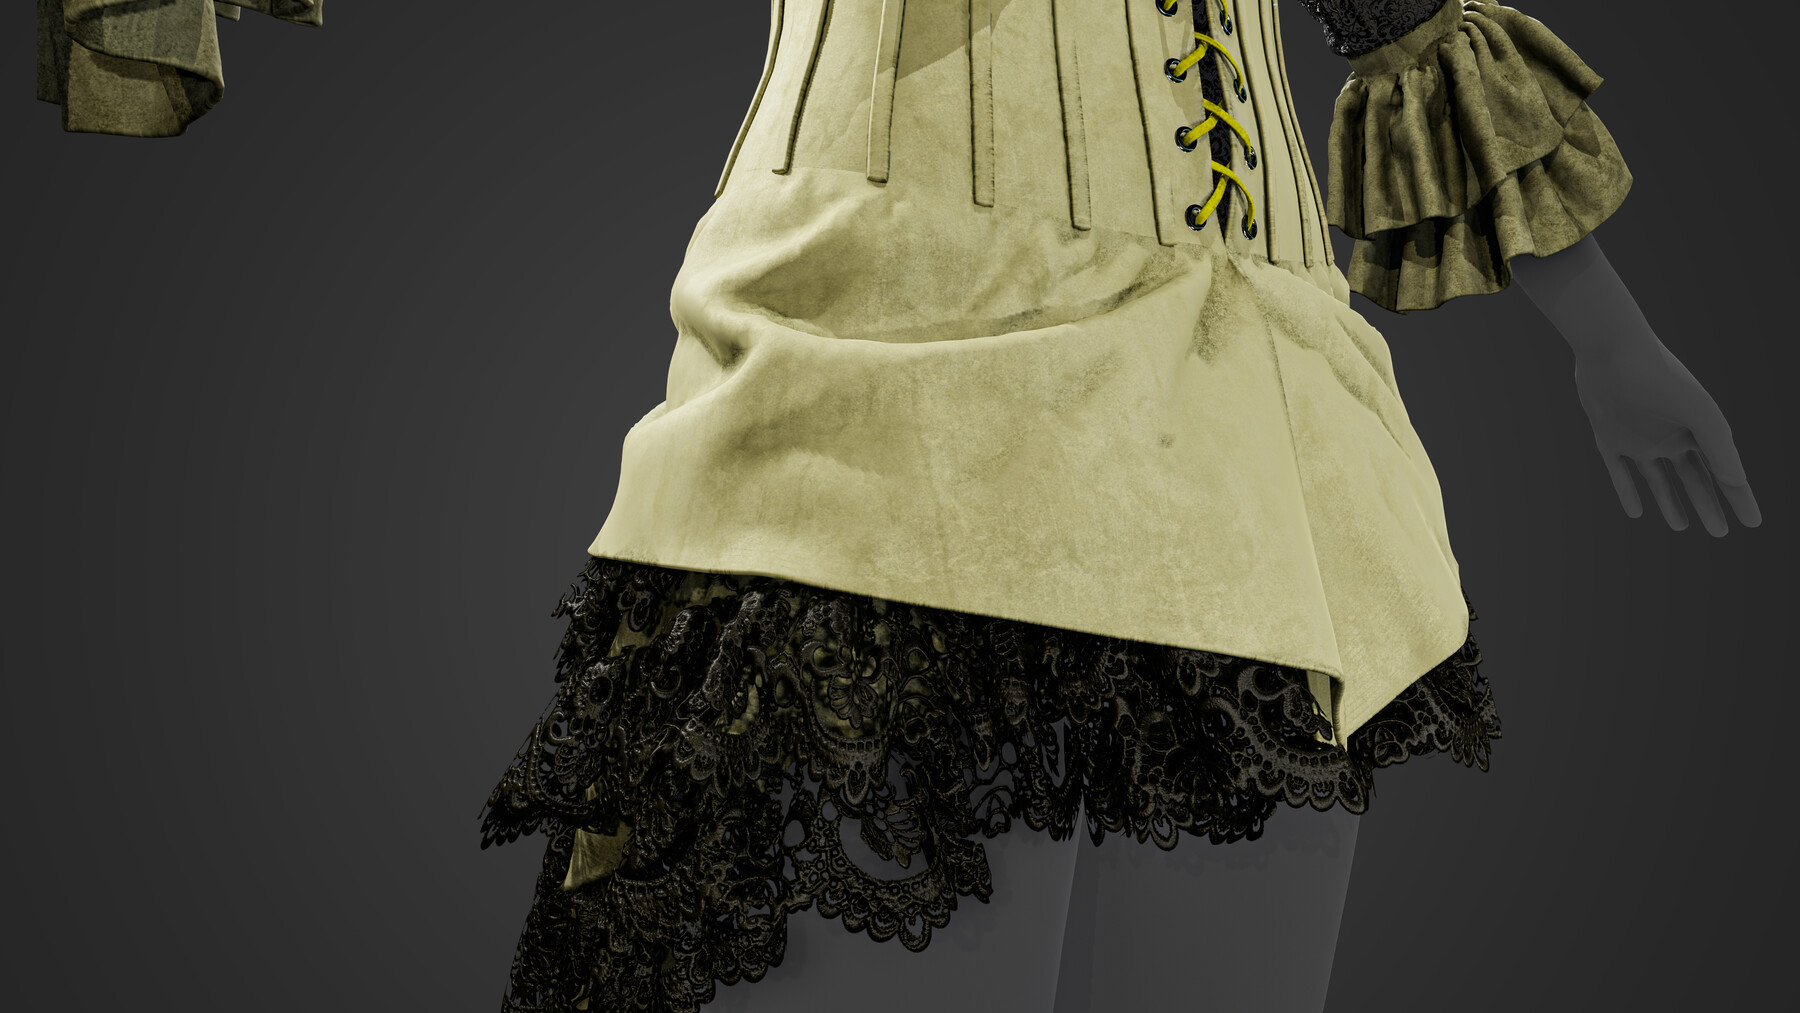 ArtStation - steampunk corset dress